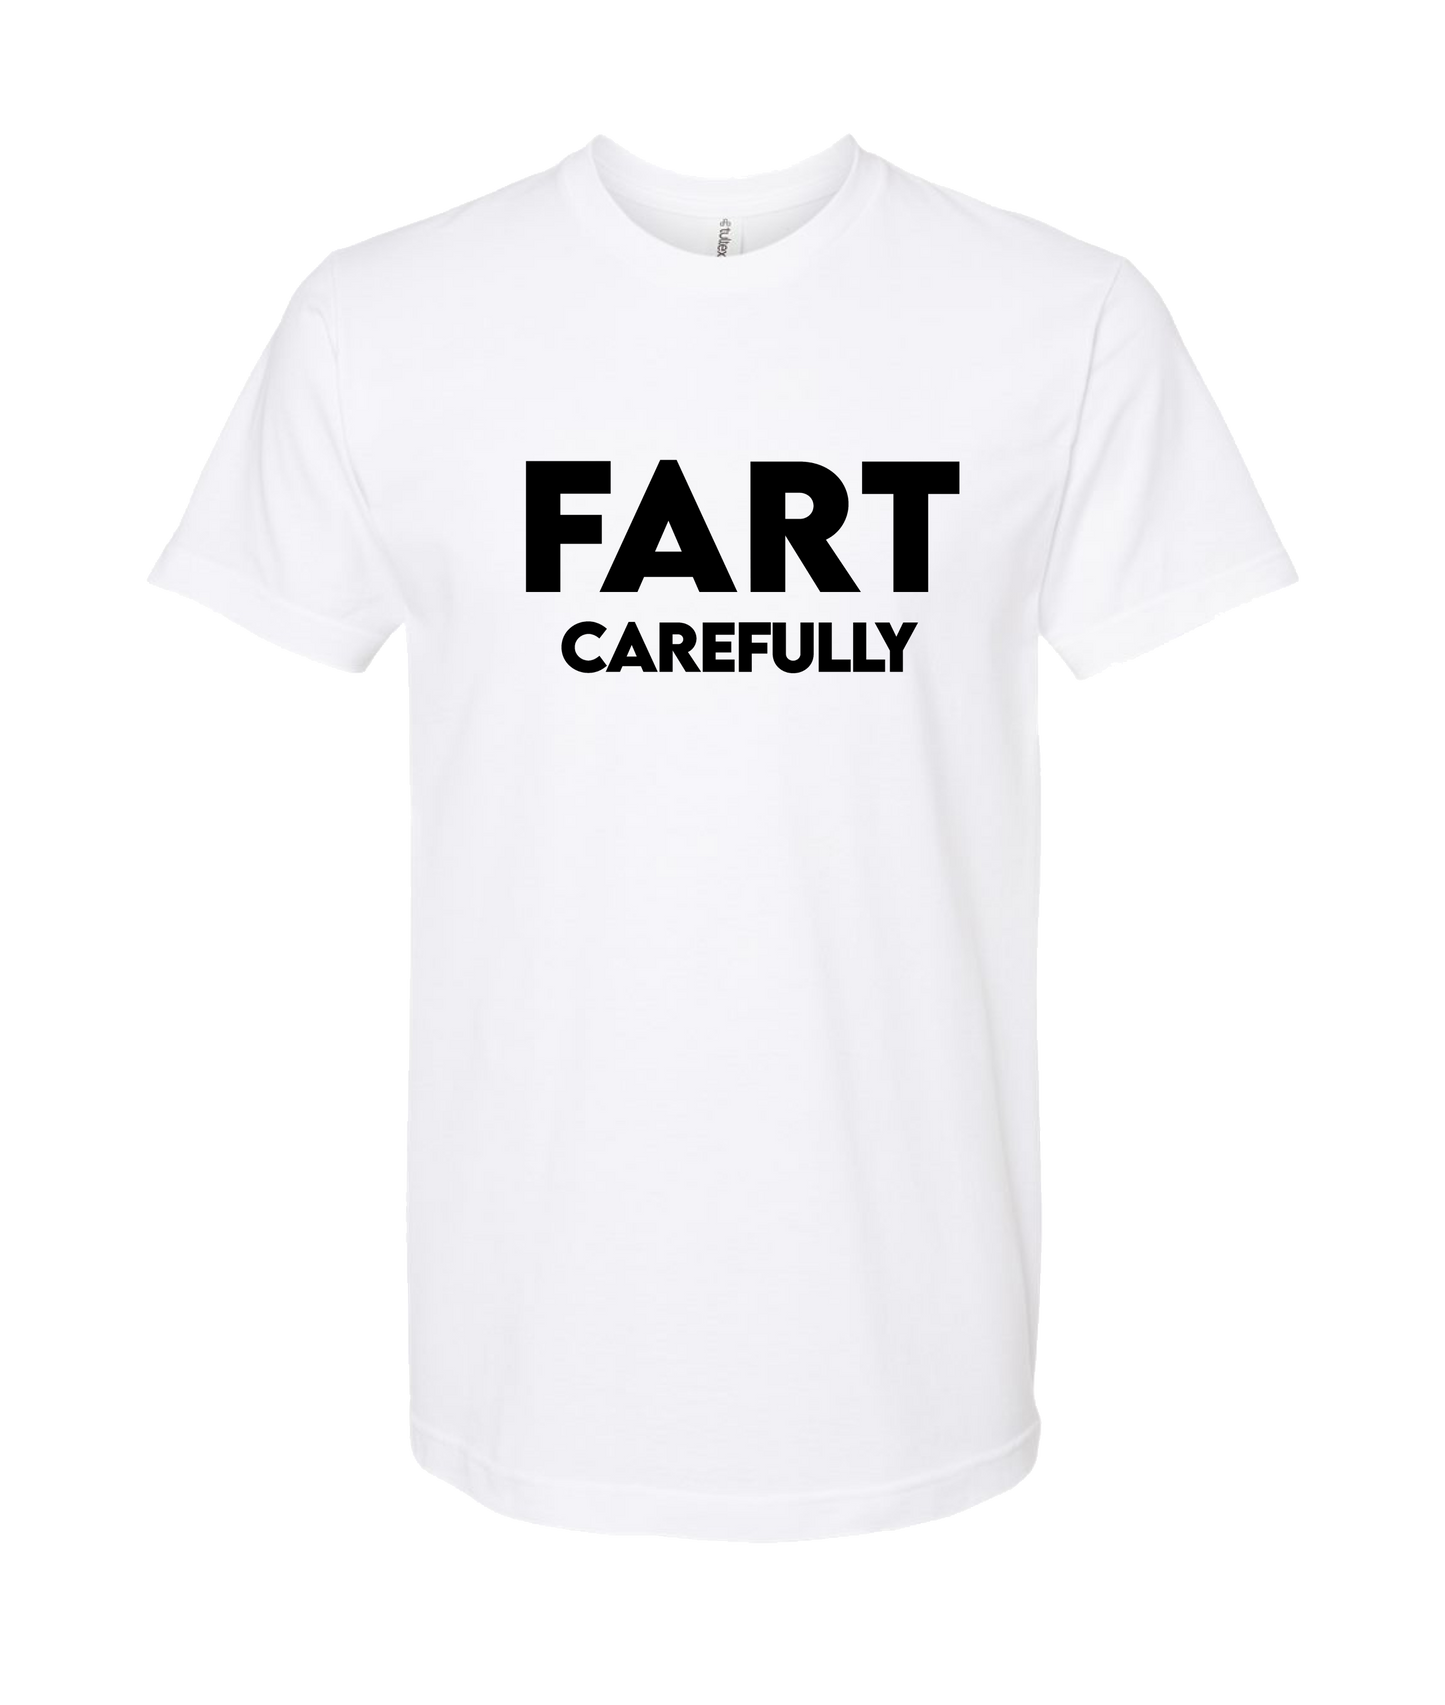 iFart - CAREFULLY - White T-Shirt